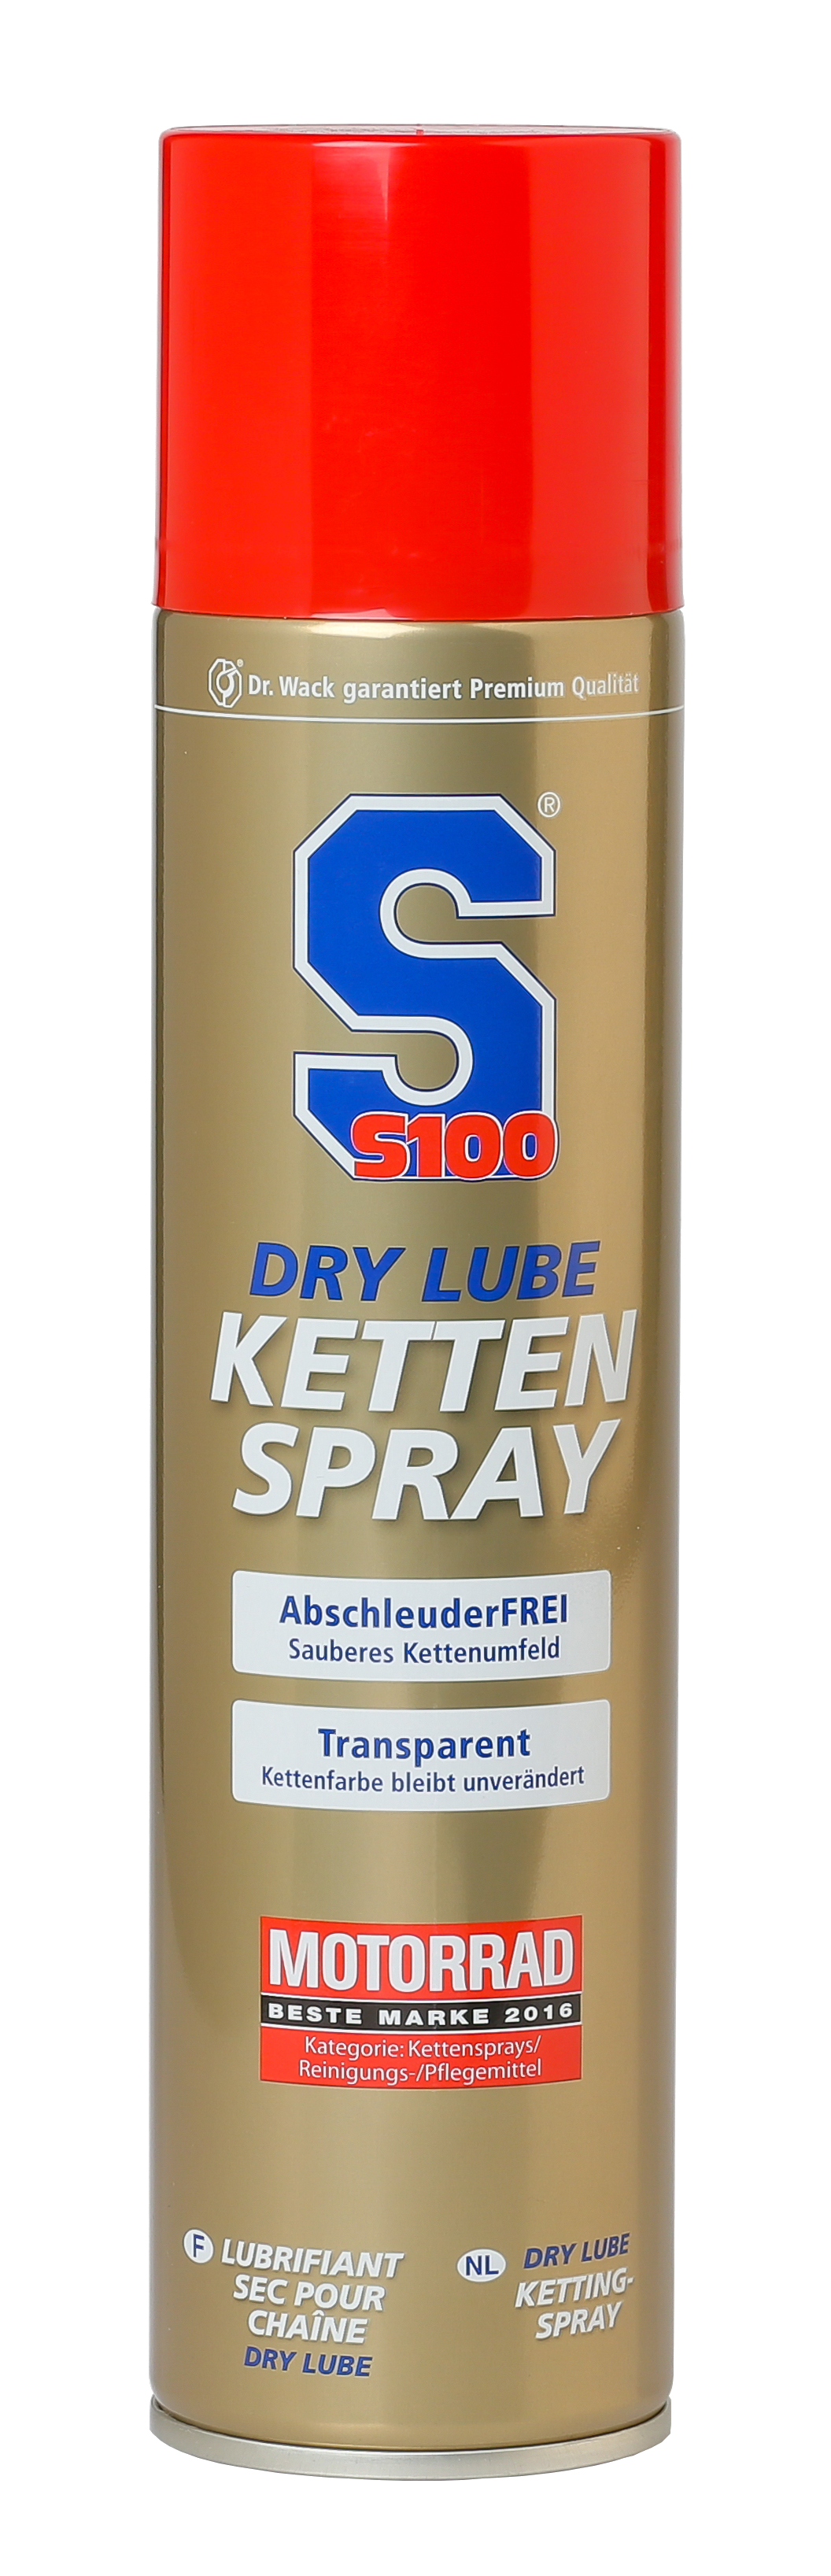 S100 Kettenspray Dry Lube Transparent - Kettenpflege Motorrad